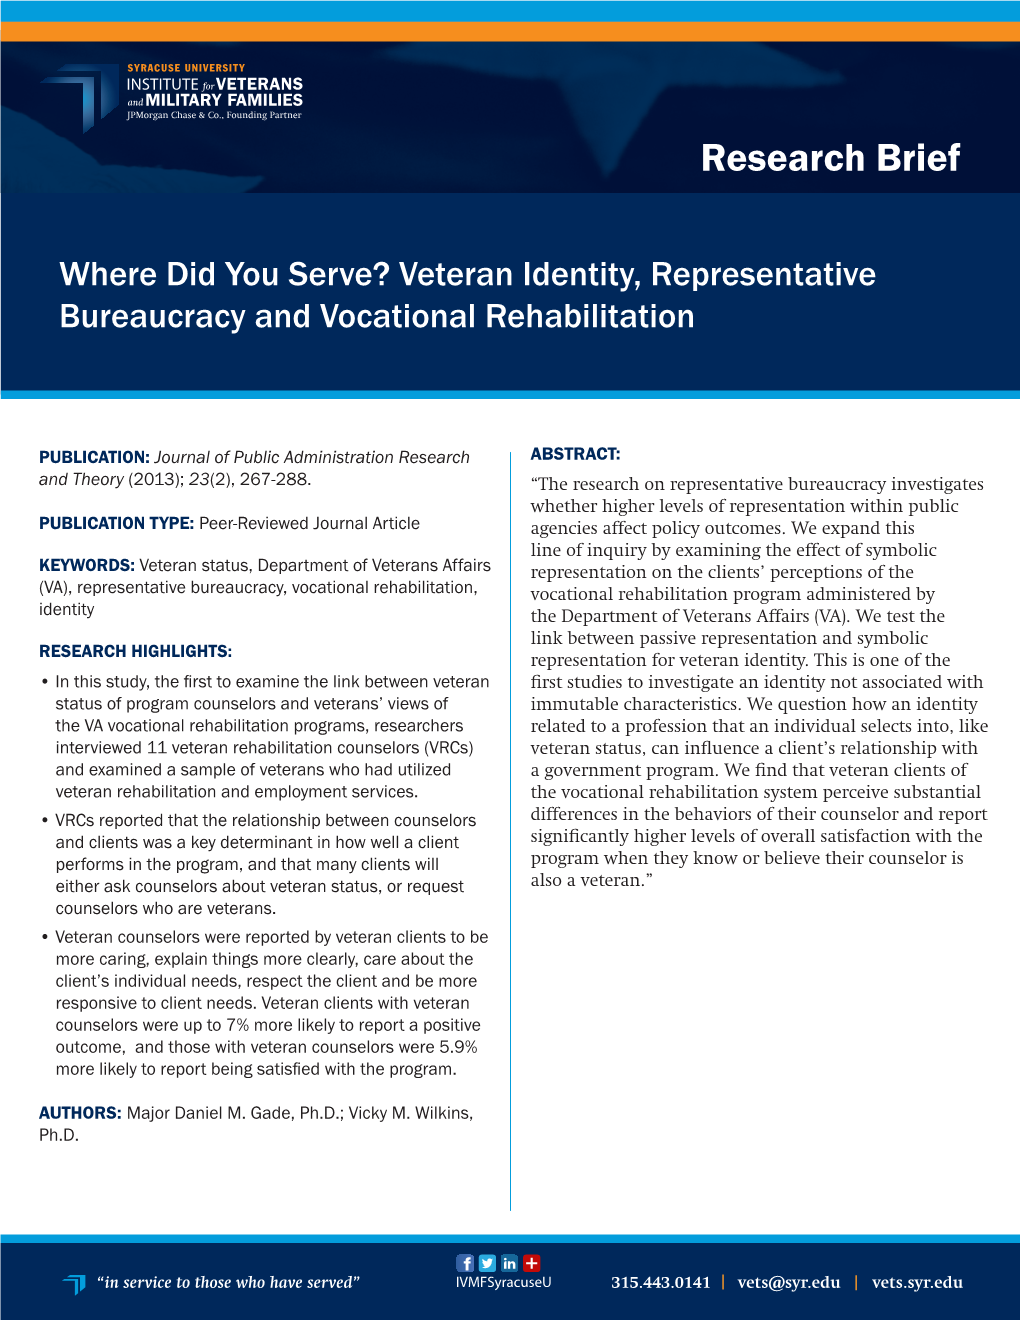 Veteran Identity, Representative Bureaucracy and Vocational Rehabilitation